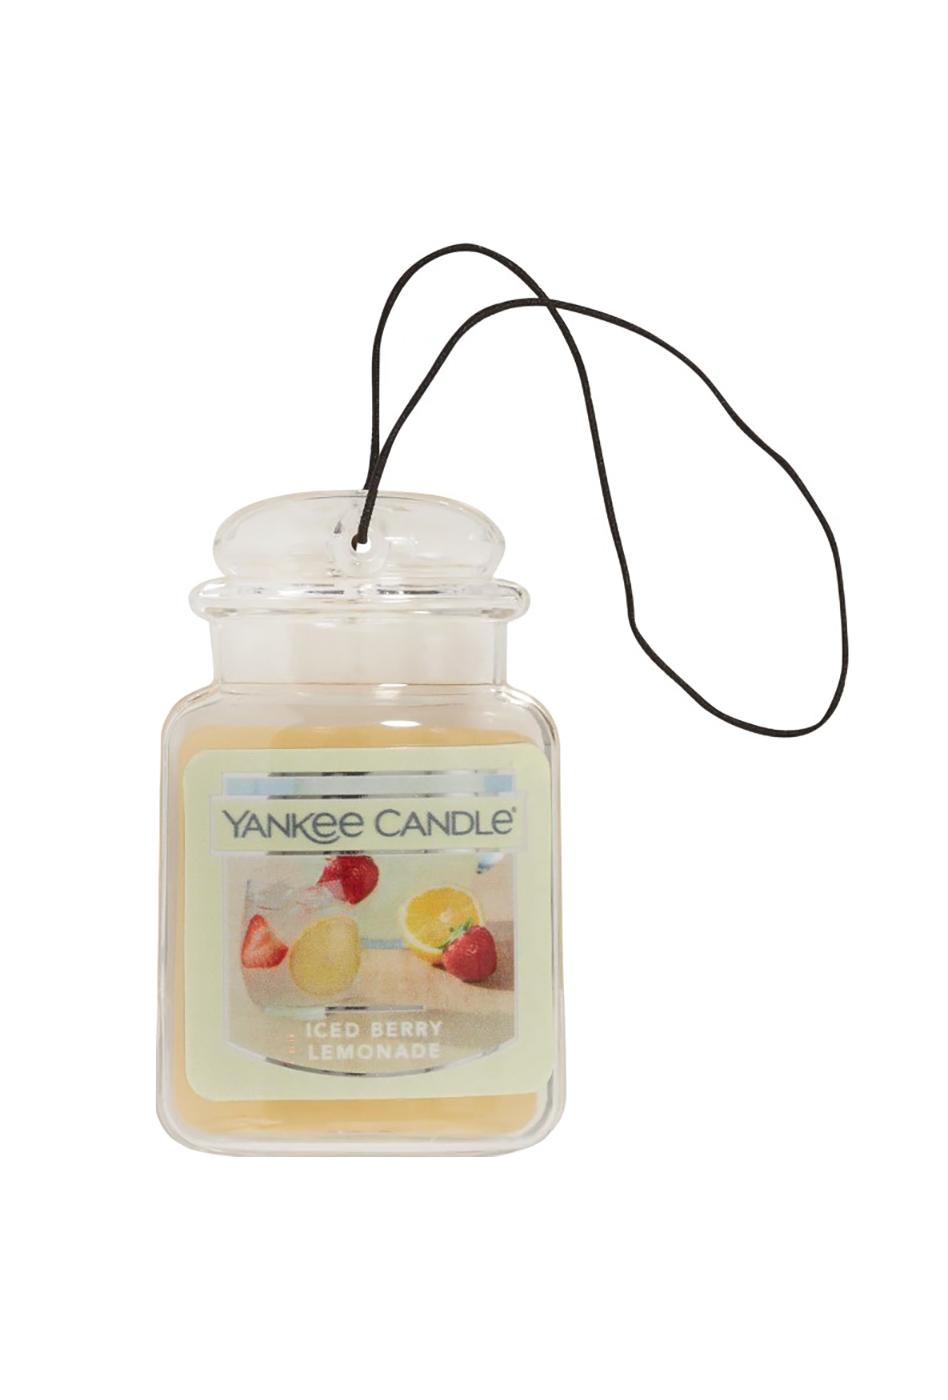 Yankee Candle Car Jar Ultimate - Iced Berry Lemonade; image 2 of 3